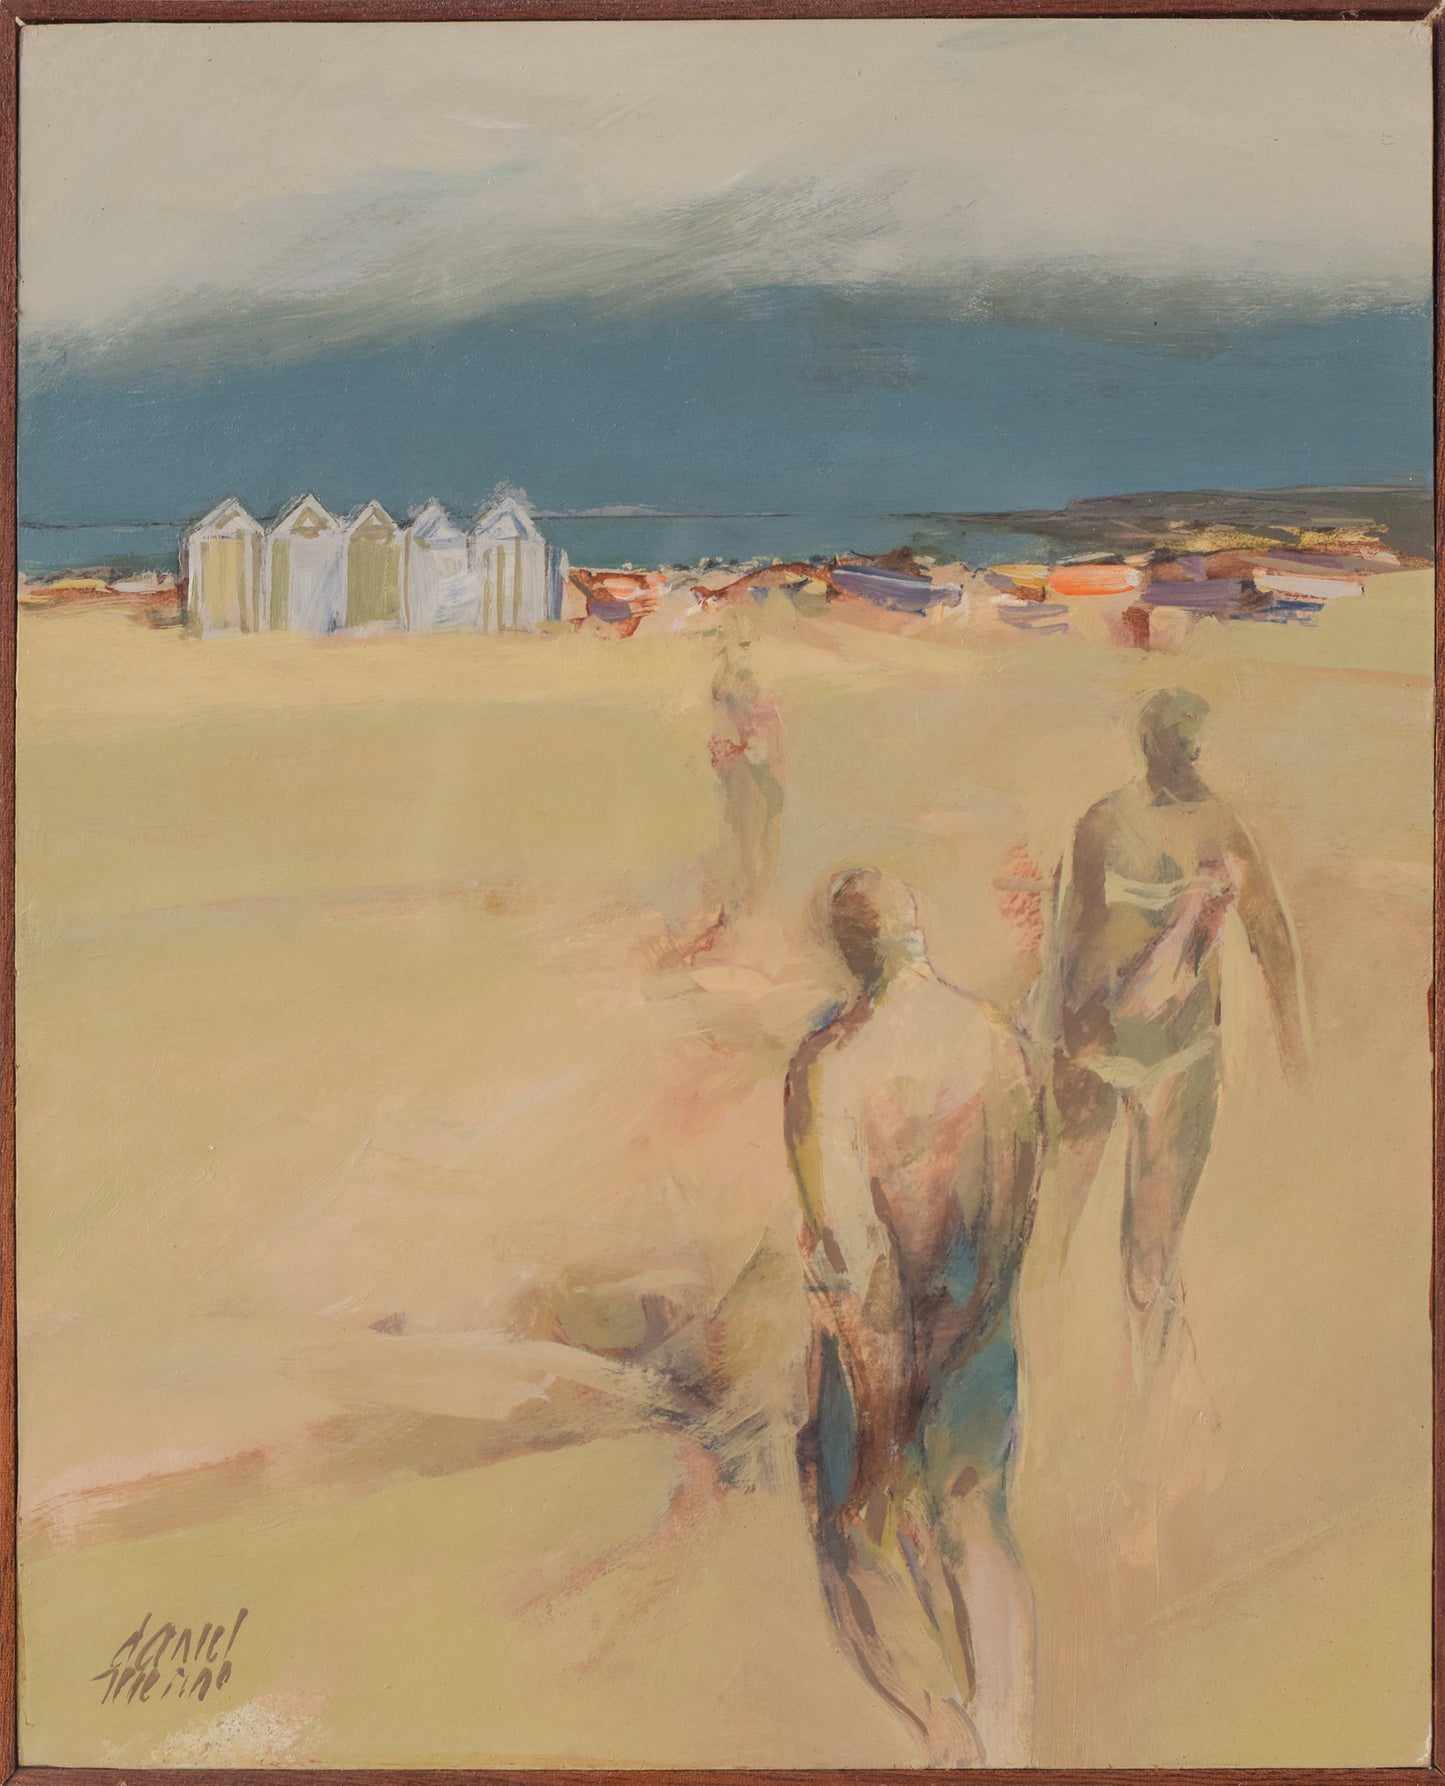 Daniel Merino - 'Playa con Figuras' (Beach with Figures)